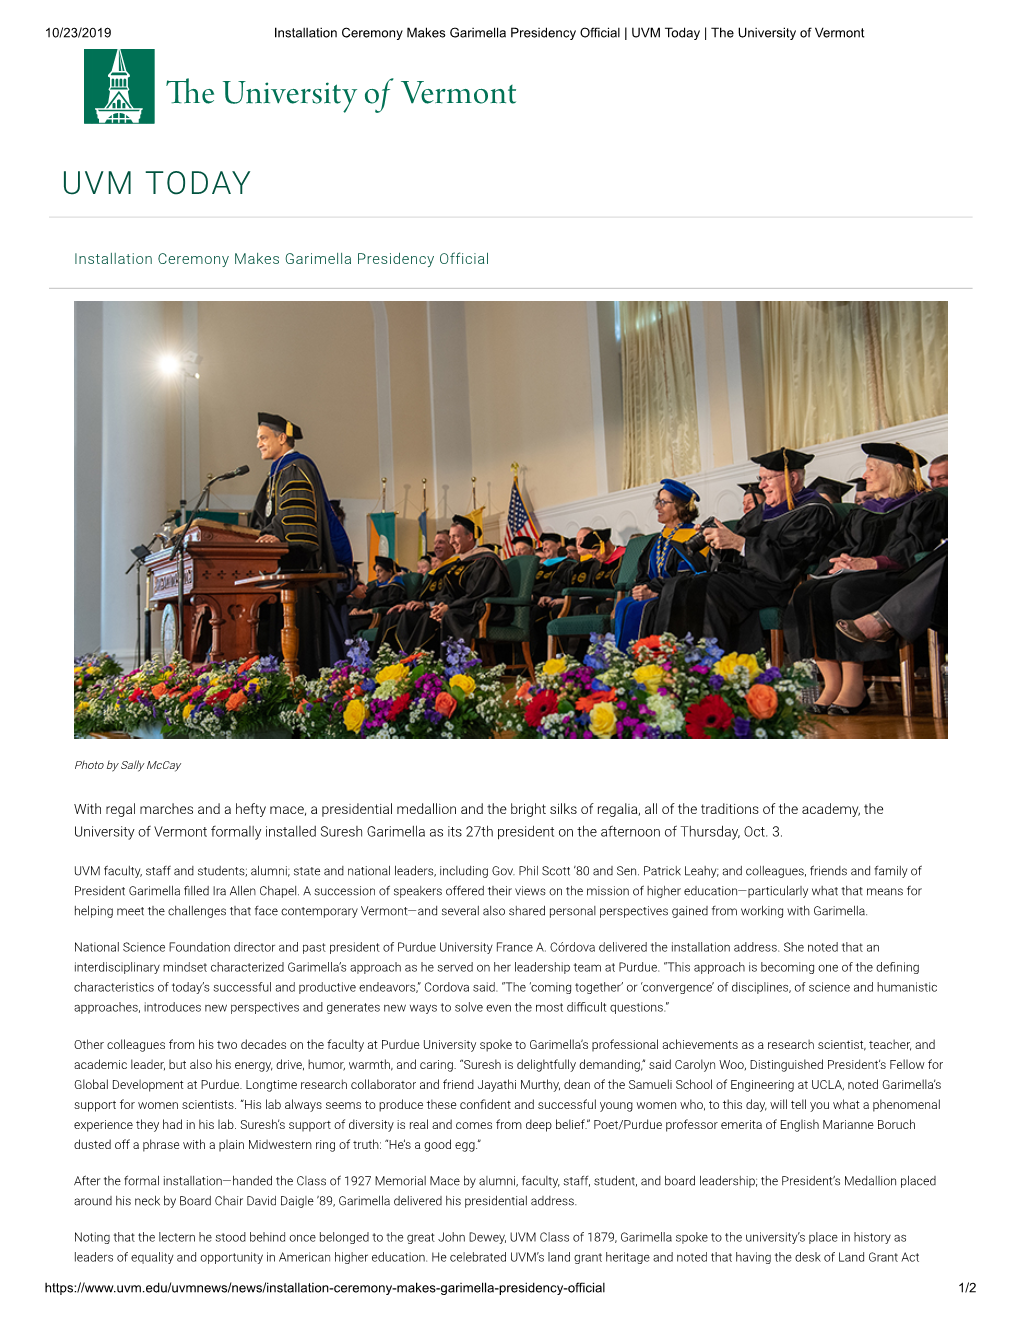 UVM Today | the University of Vermont